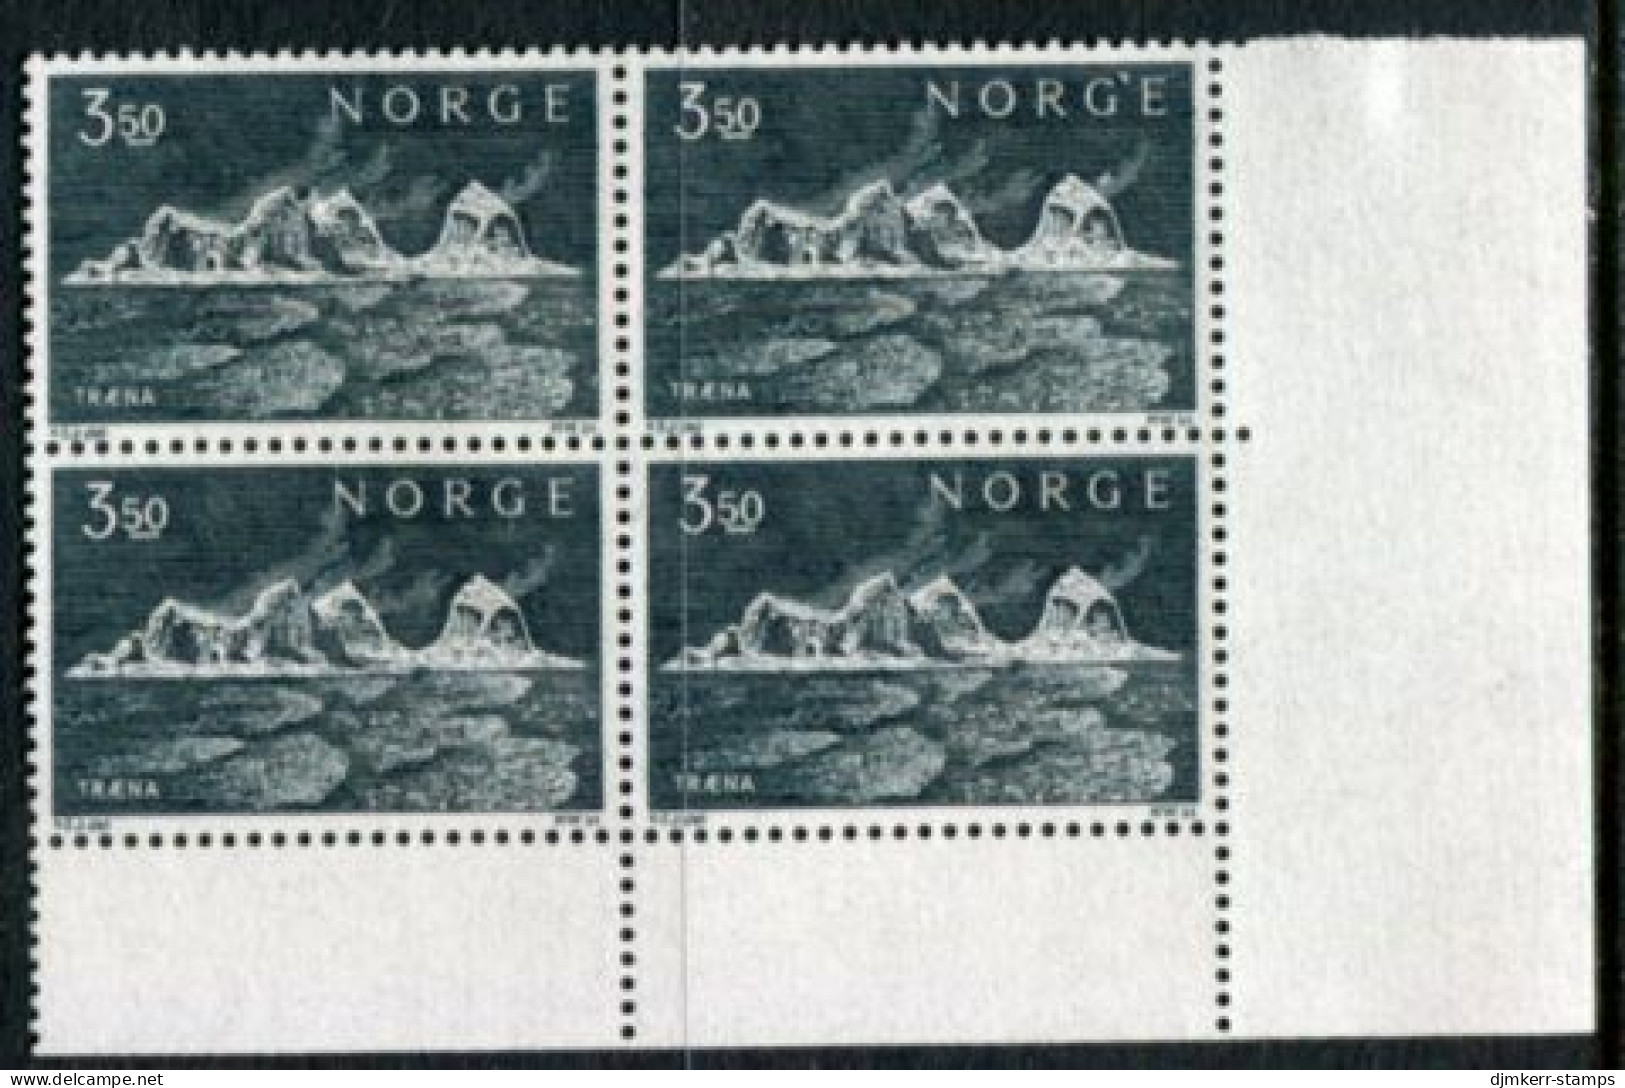 NORWAY 1969 Traena Islands Block Of 4 MNH / **.  Michel 587 - Nuovi